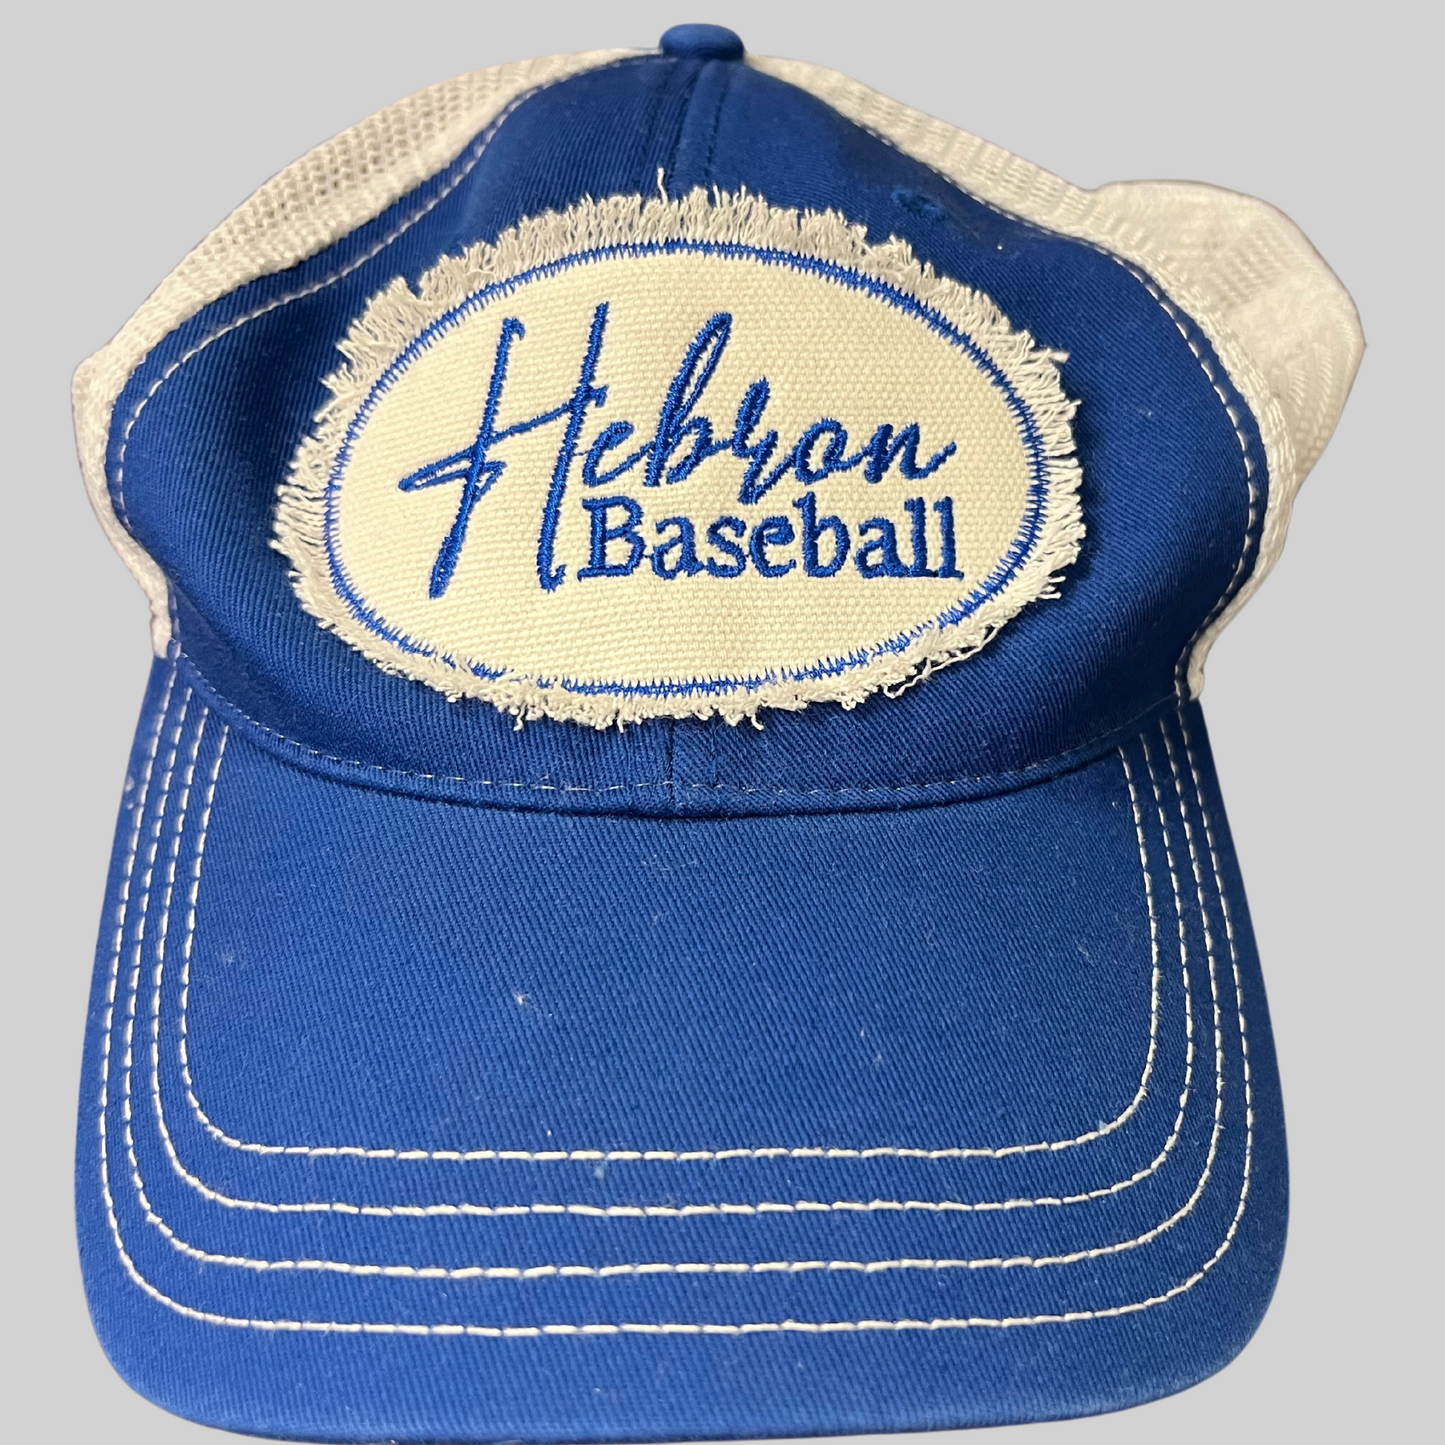 Hebron High School Baseball Legacy Cap